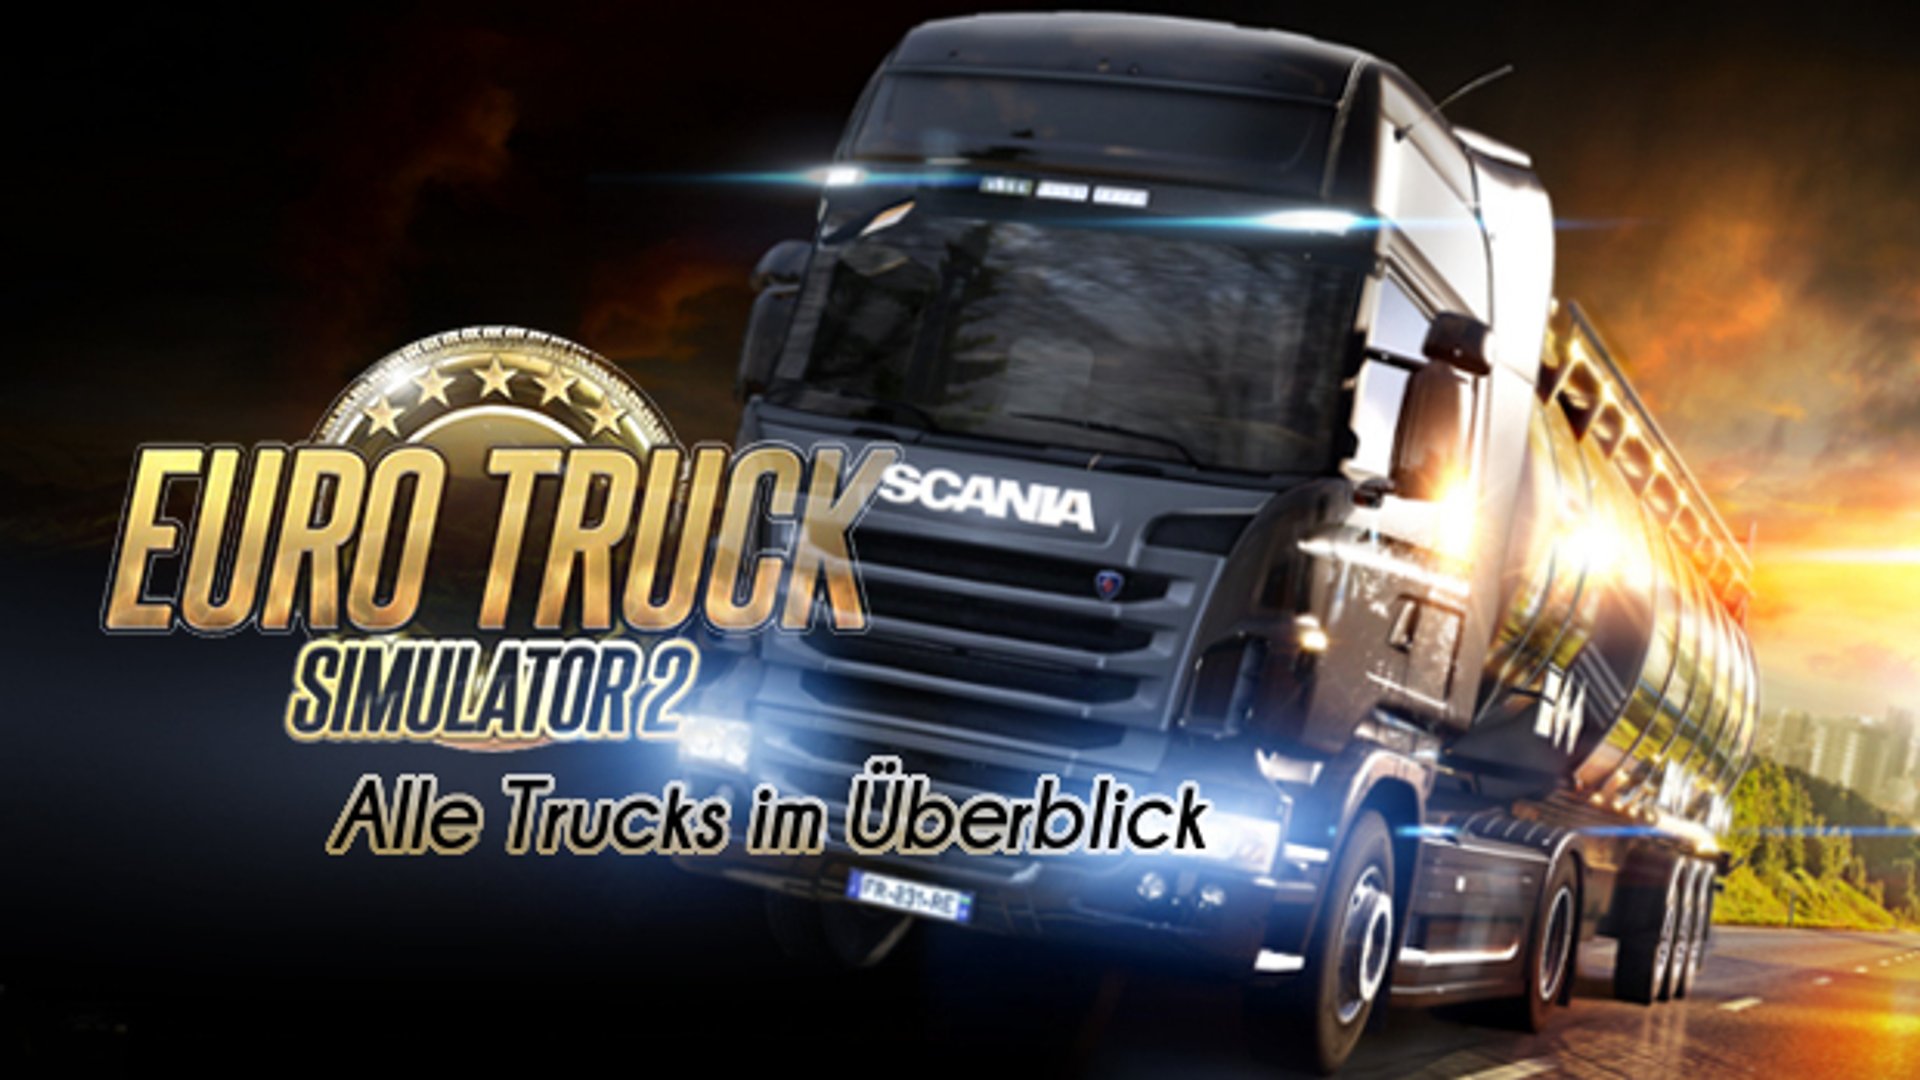 https://static.giga.de/wp-content/uploads/2014/11/euro-truck-simulator-2-trucks_giga-rcm1920x1080u.jpg